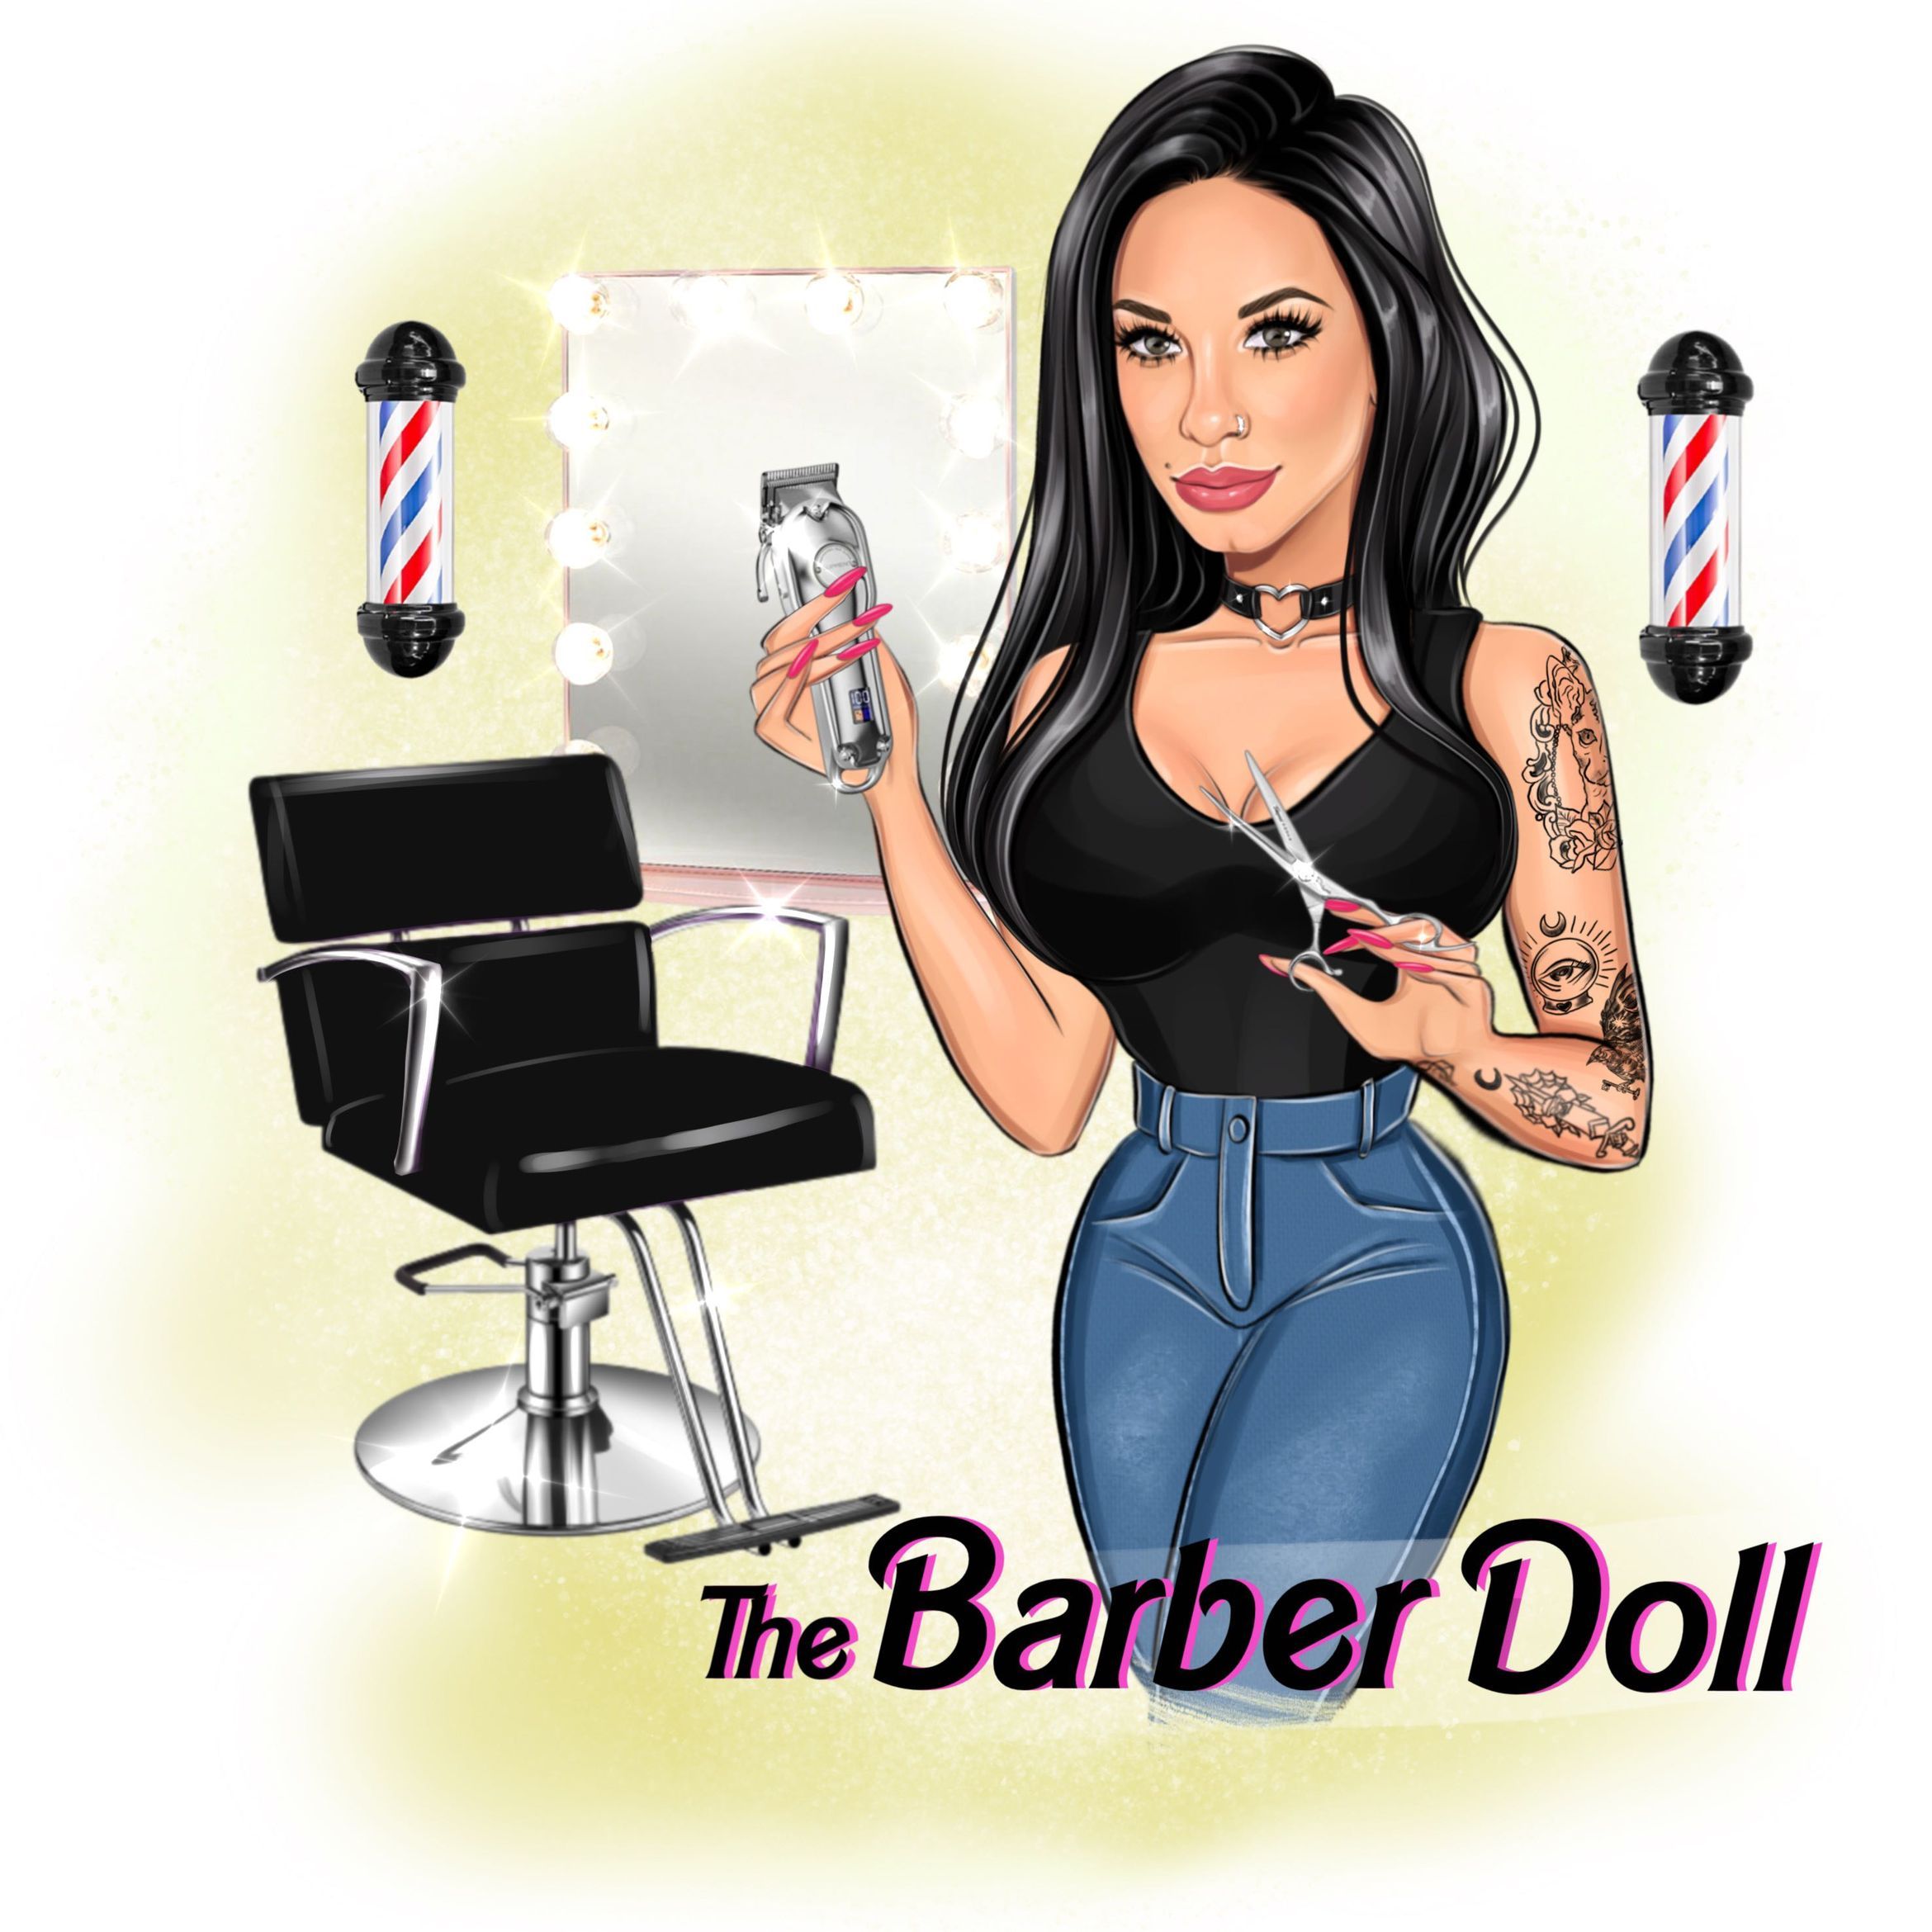 The Barber Doll (Sarah), 16305 Kensington Dr, Suite 110, Sugar Land, 77479